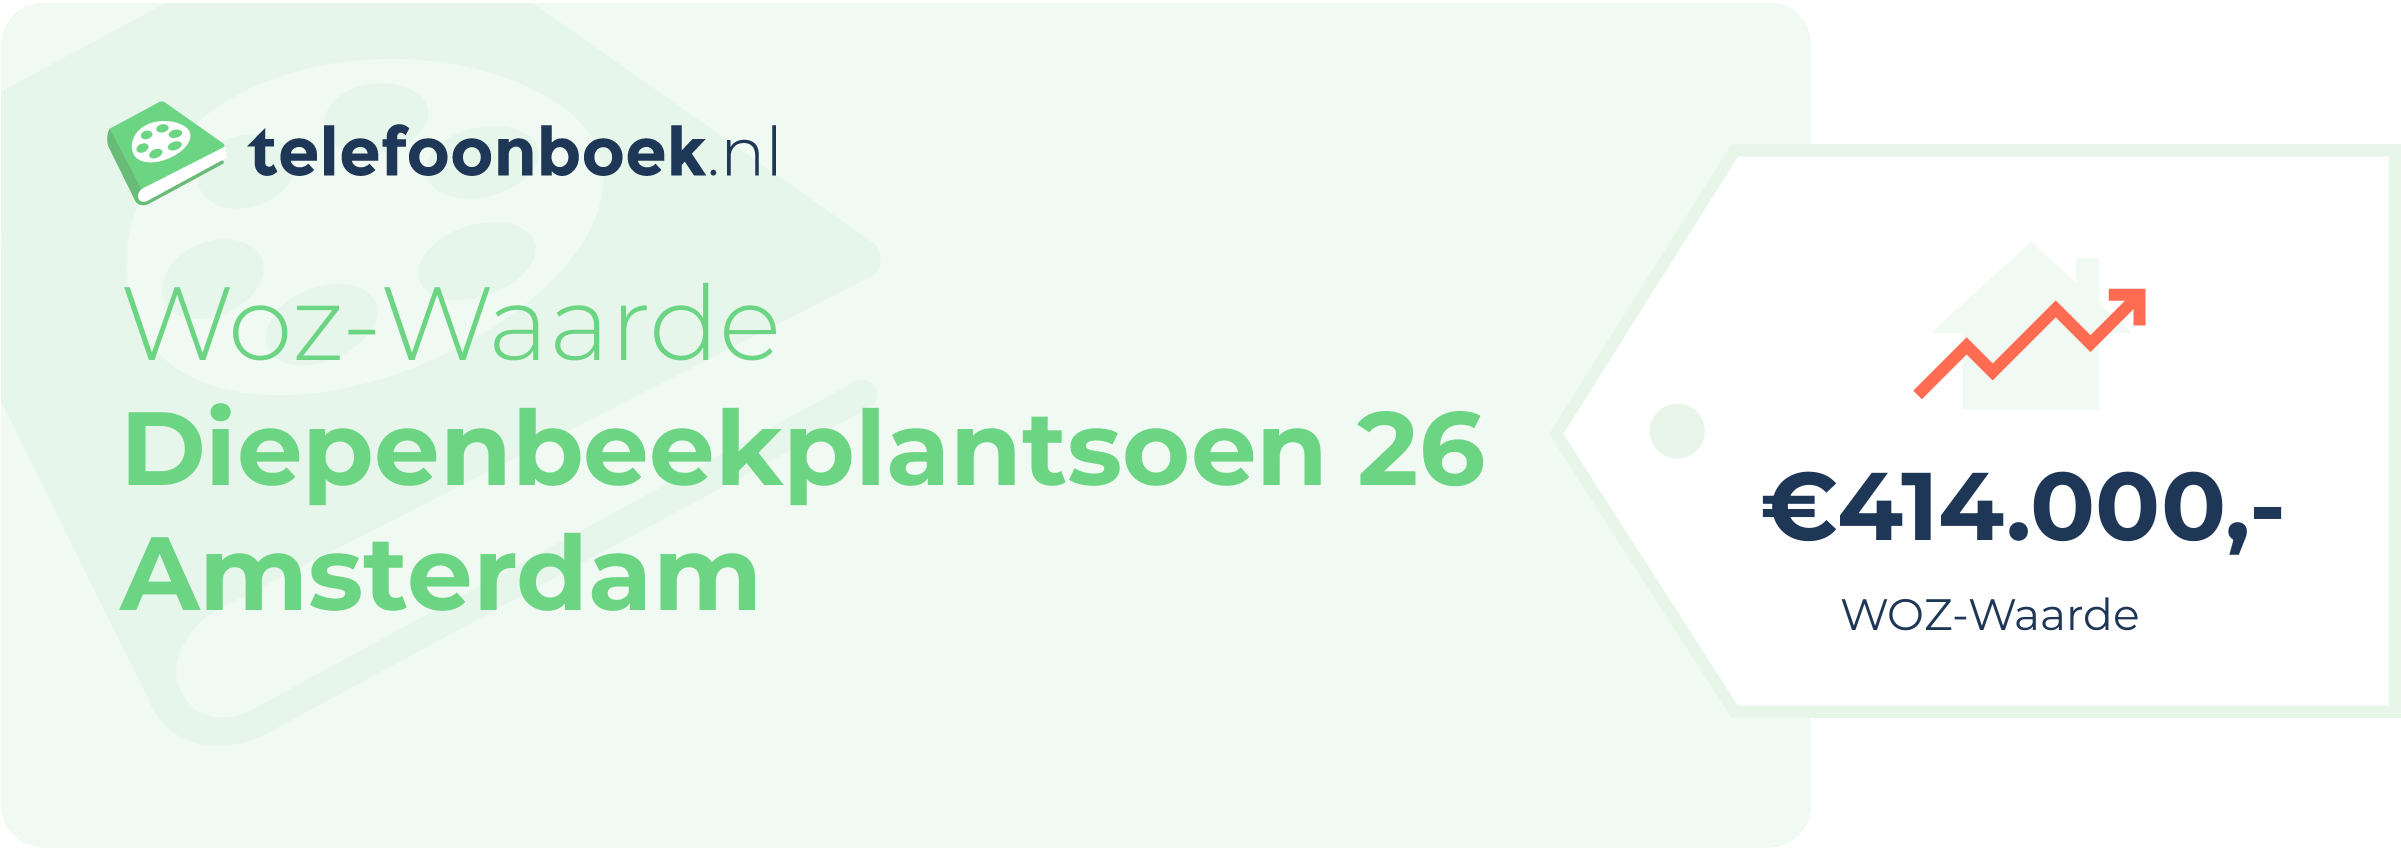 WOZ-waarde Diepenbeekplantsoen 26 Amsterdam